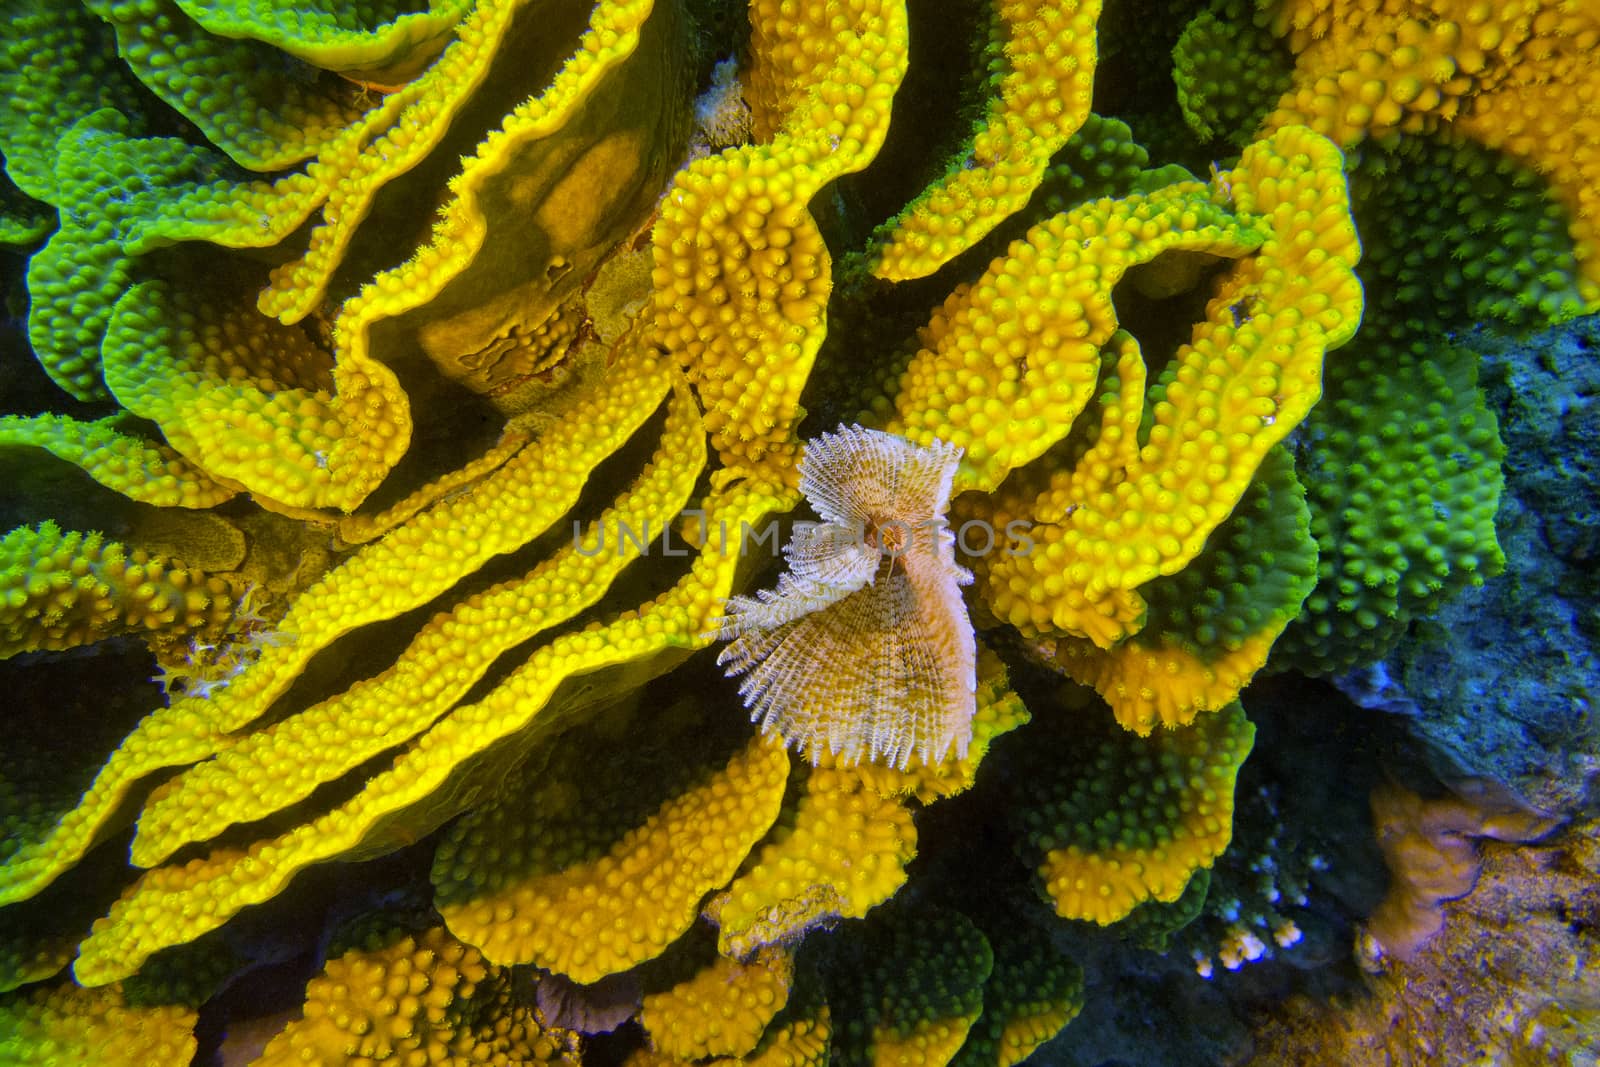  yellow turbinaria mesenterina coral  and fan worm, underwater by mychadre77